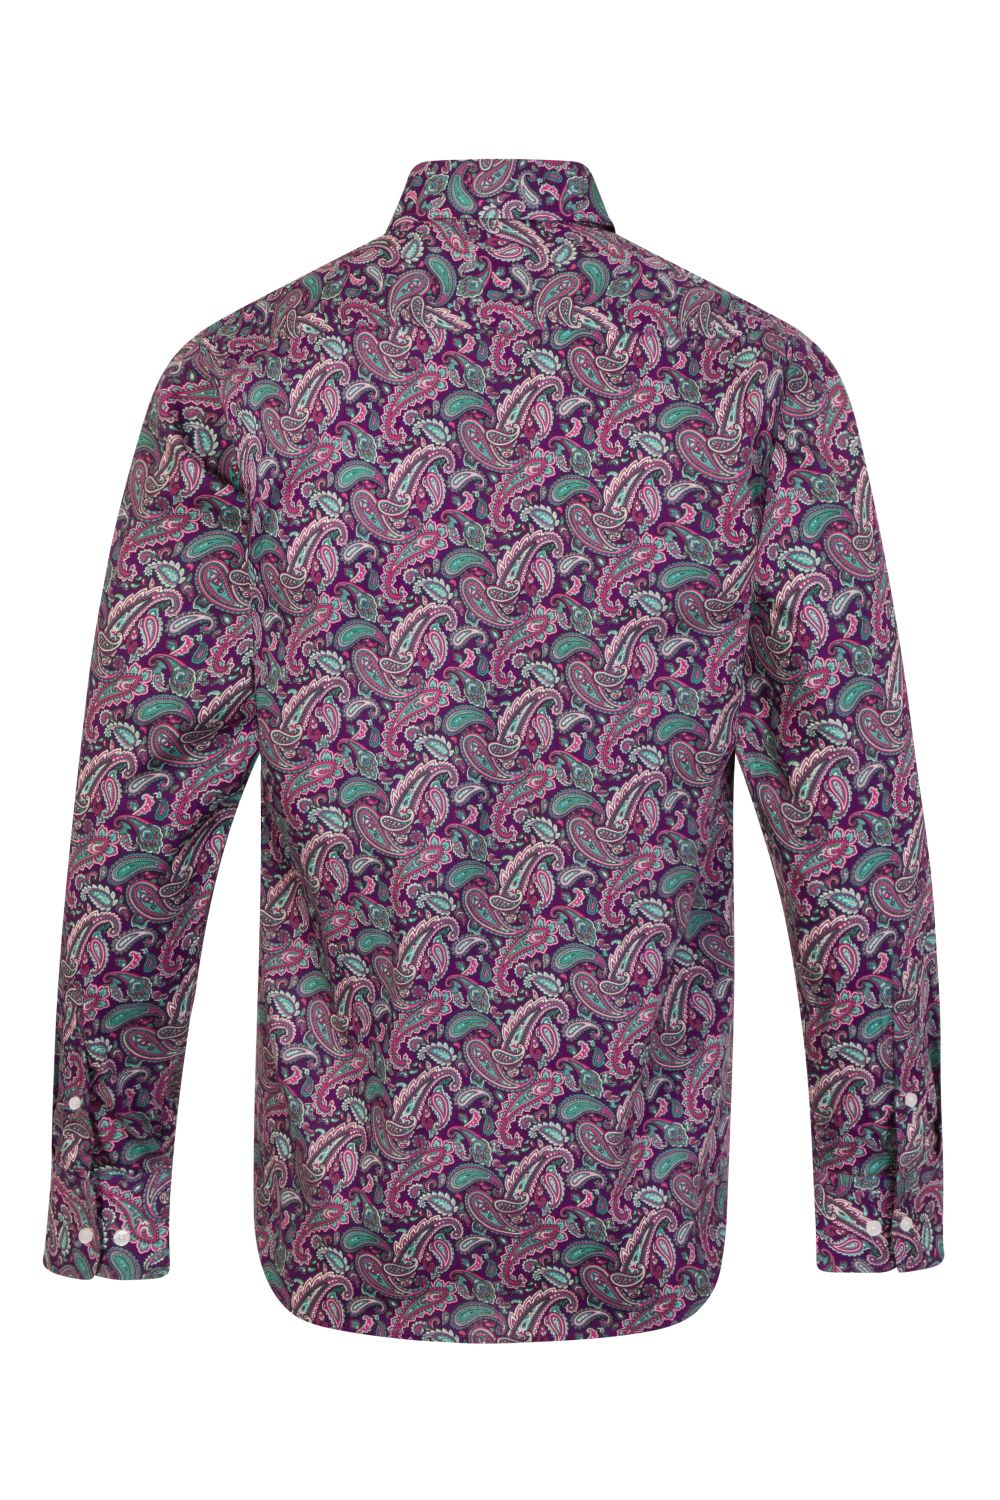 Paisley Purple Regular Fit 100% Cotton Shirt